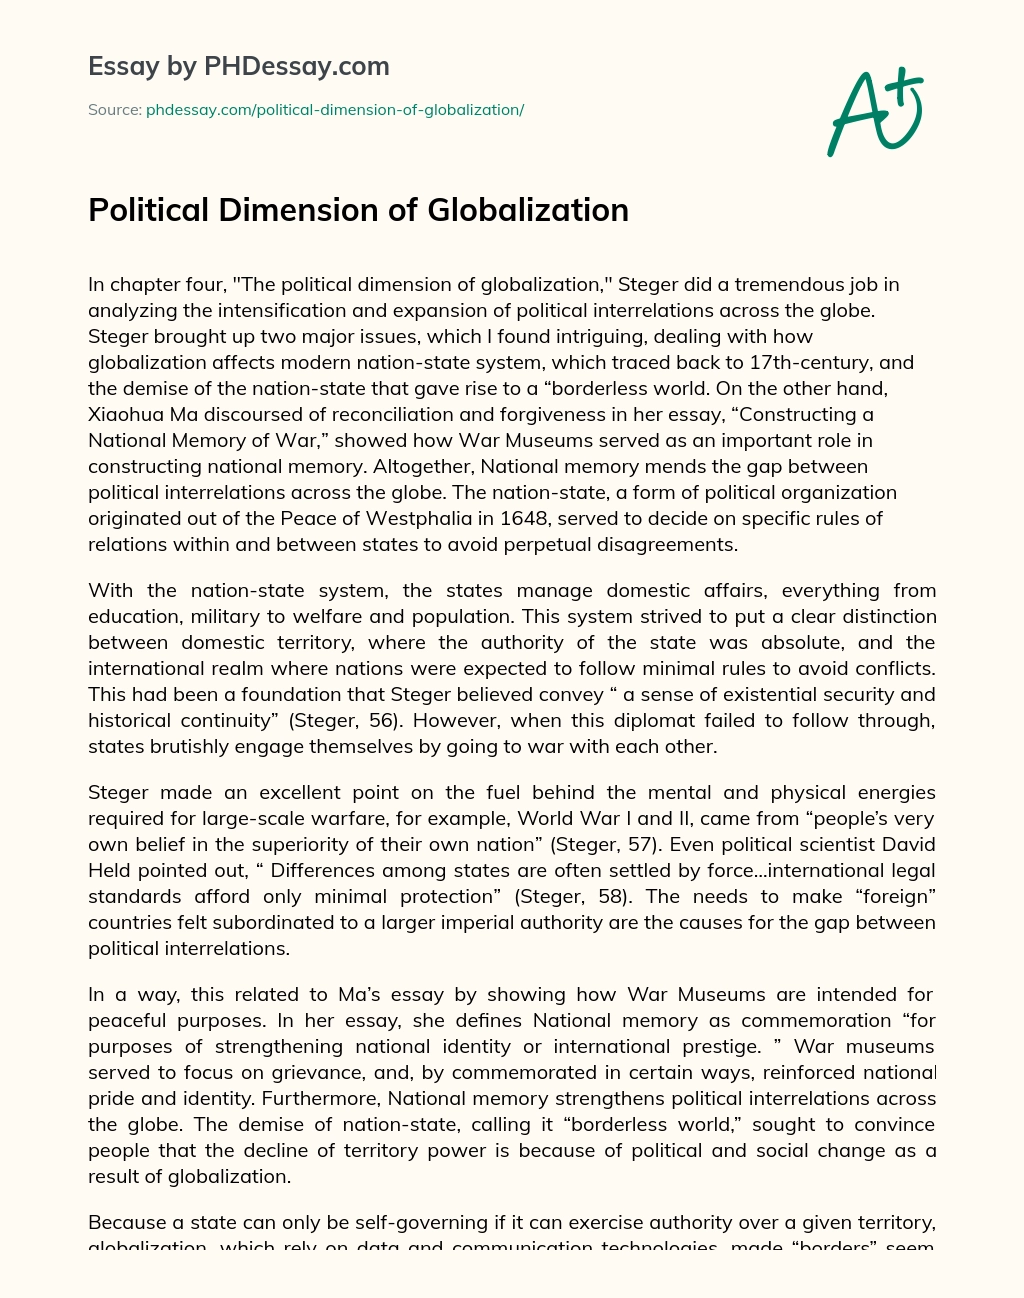 Political Dimension of Globalization essay